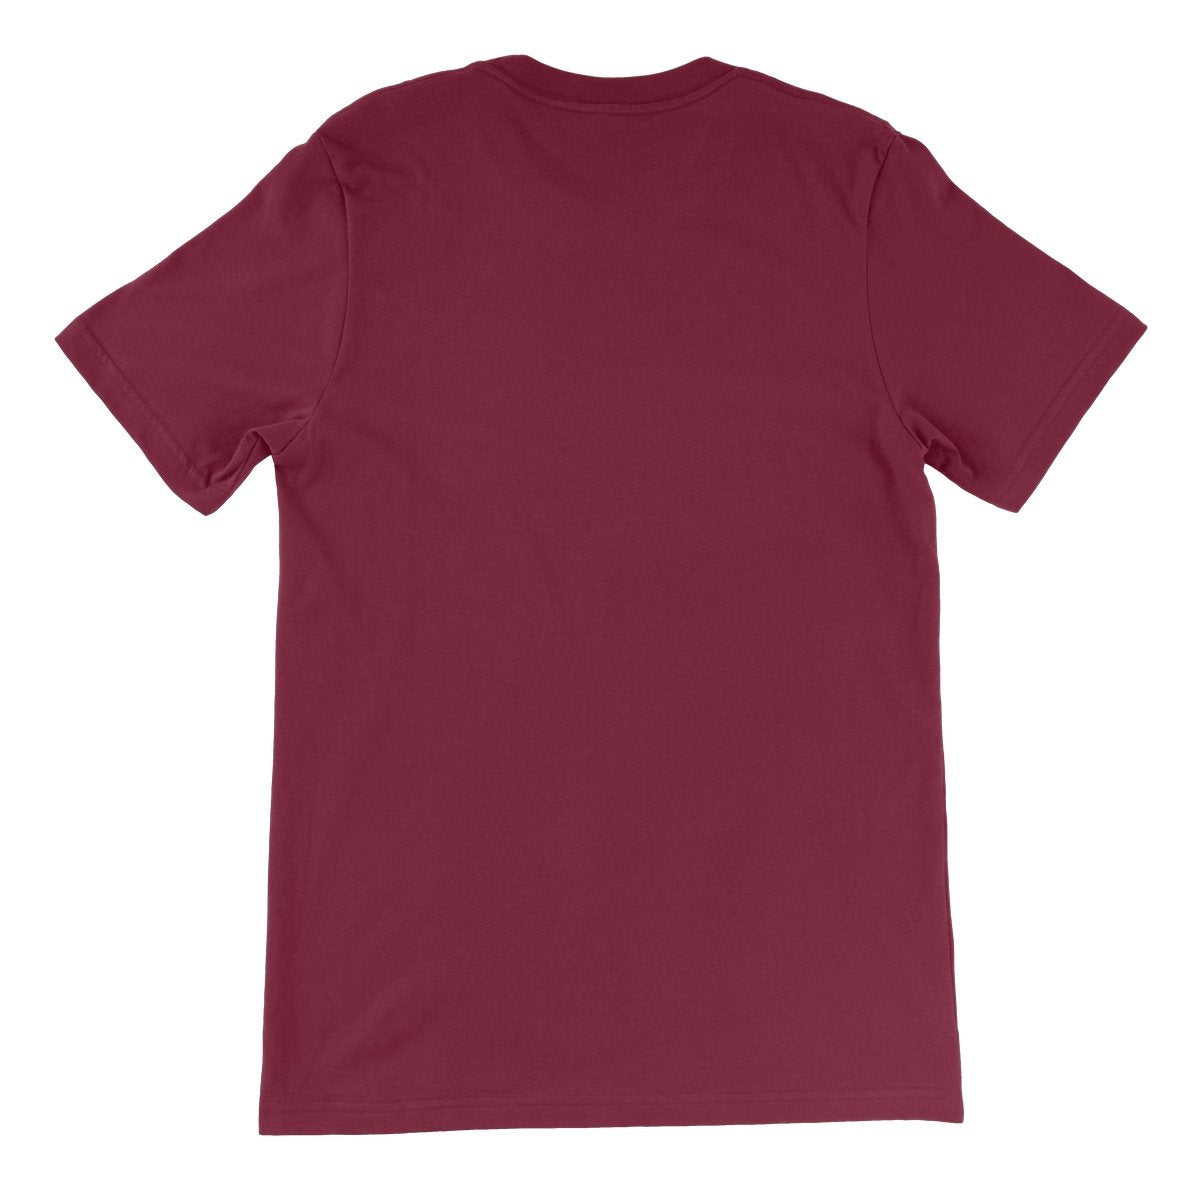 Unisex Premium T-Shirt - 'Old Friends'